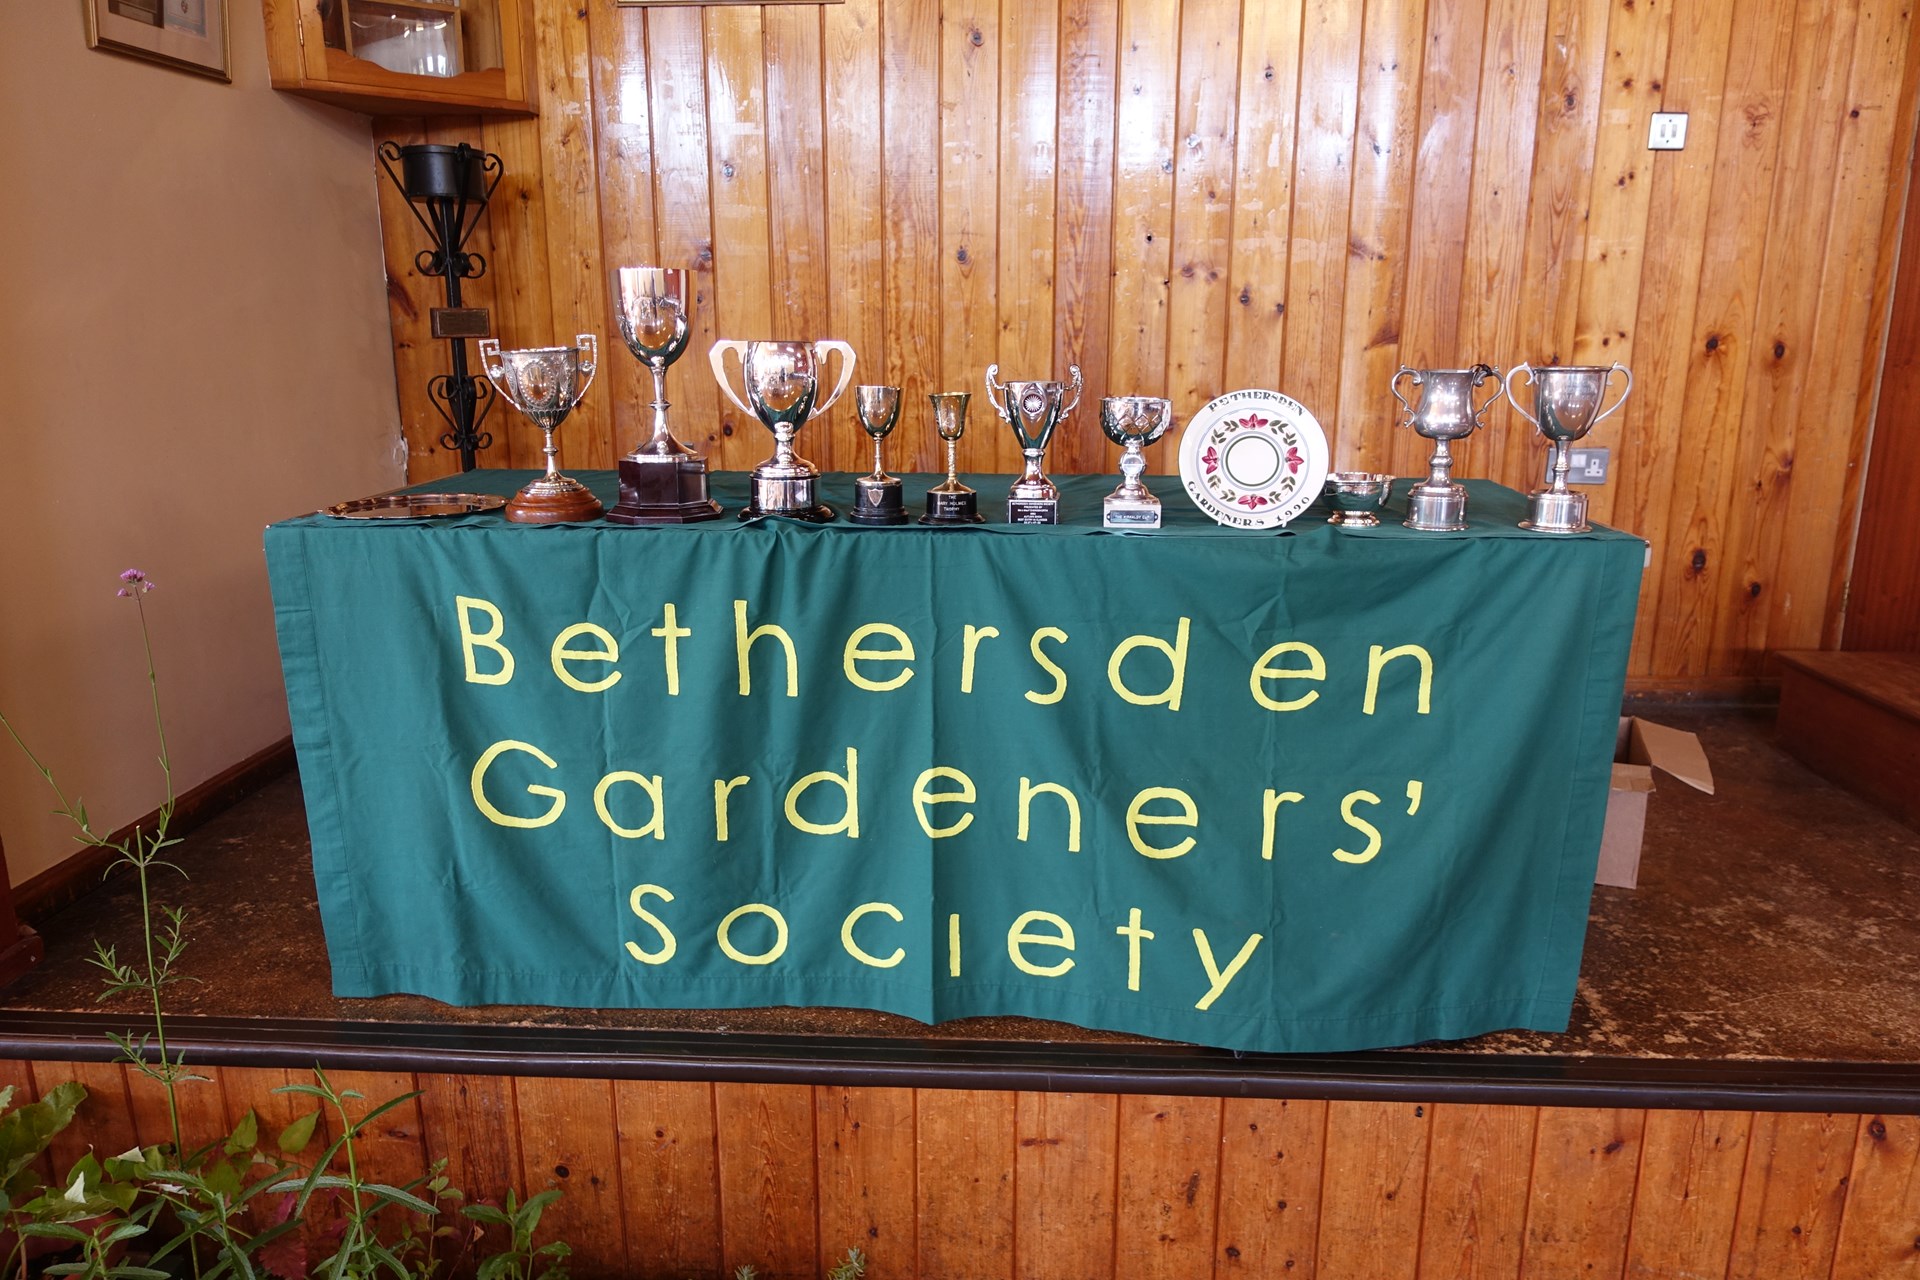 BETHERSDEN GARDENERS' SOCIETY CUPS